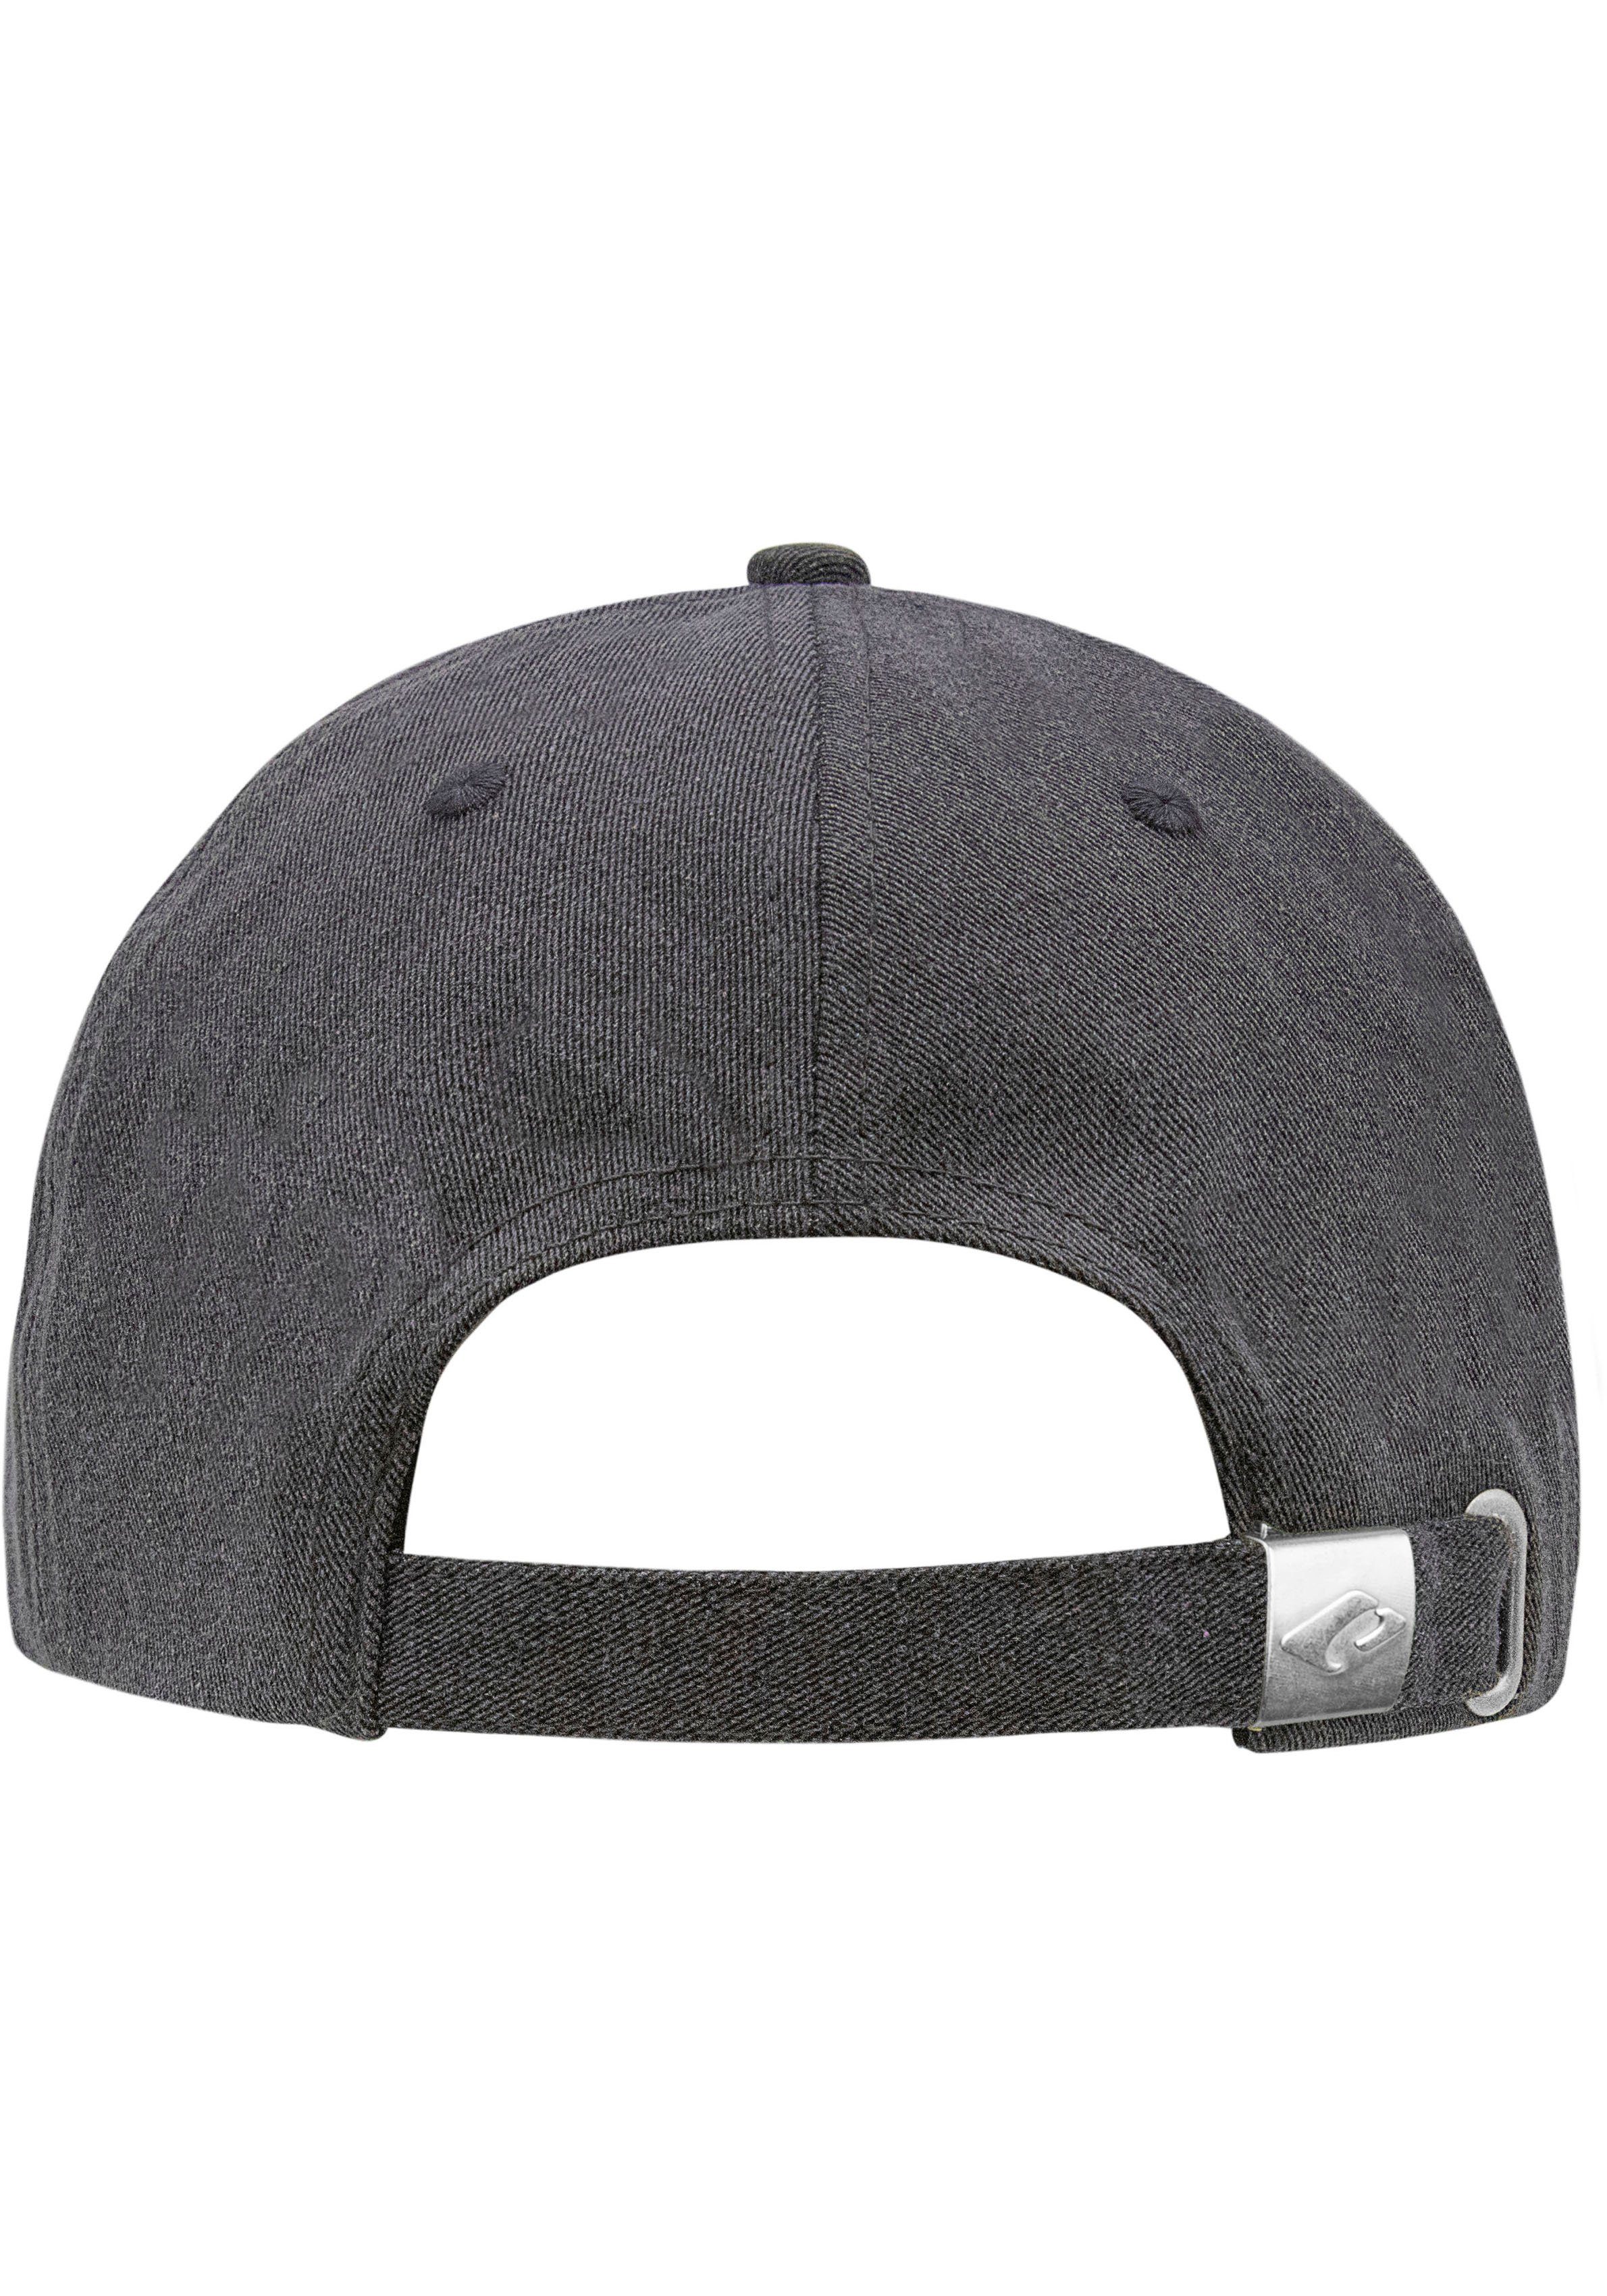 Arklow Cap Baseball chillouts Hat dunkelgrau